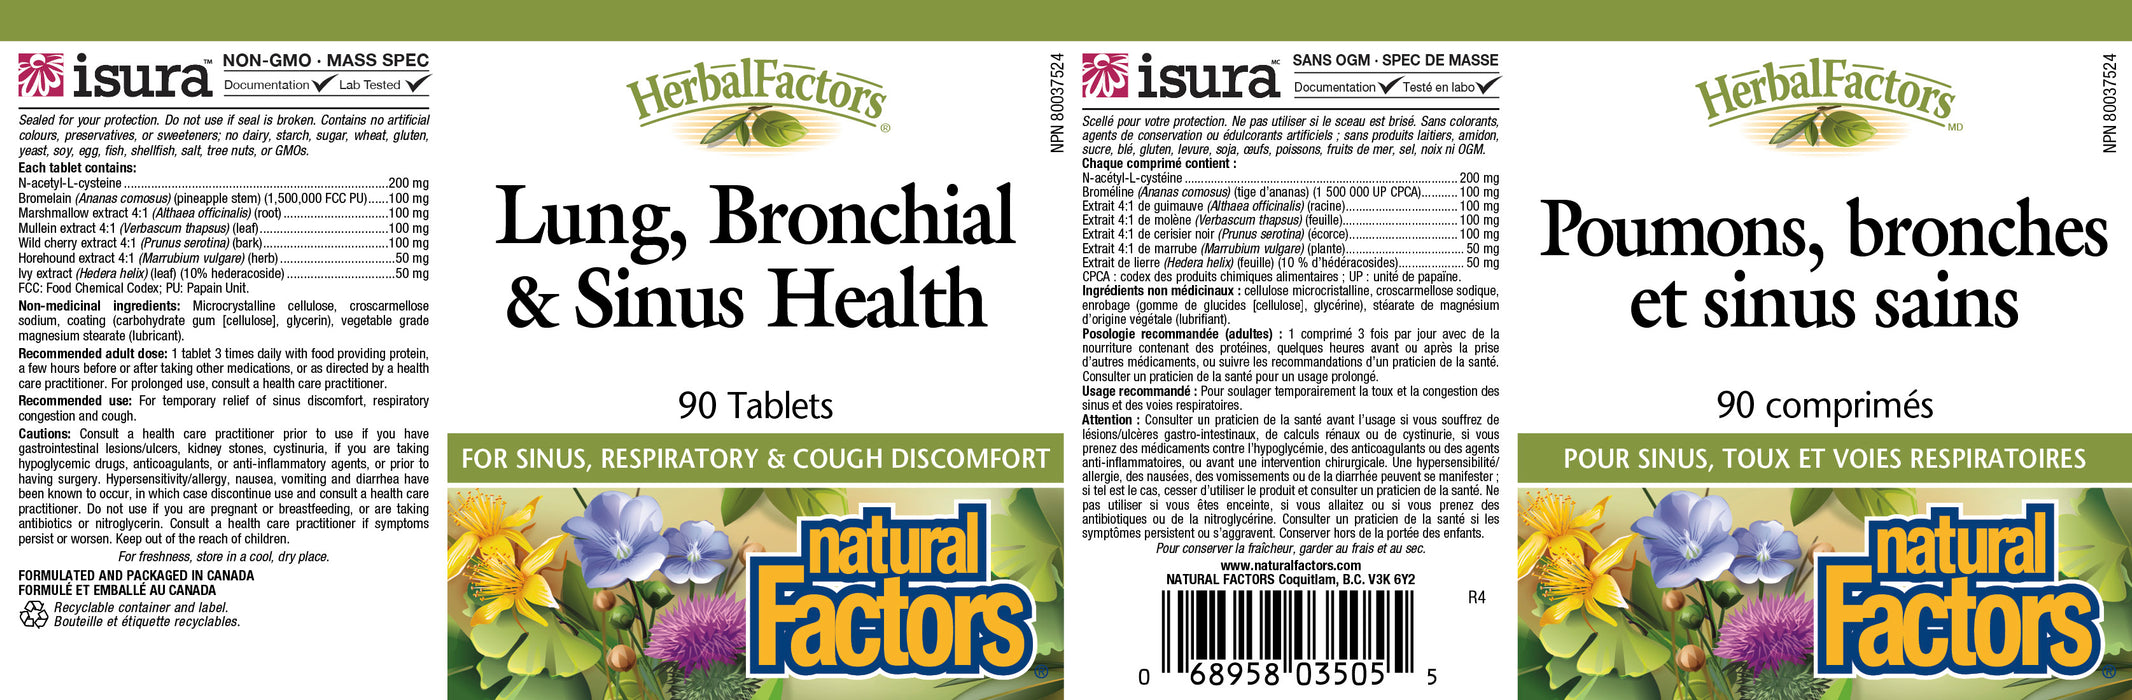 Natural Factors Herbal Factors Lung, Bronchial & Sinus Health 90 Tablets